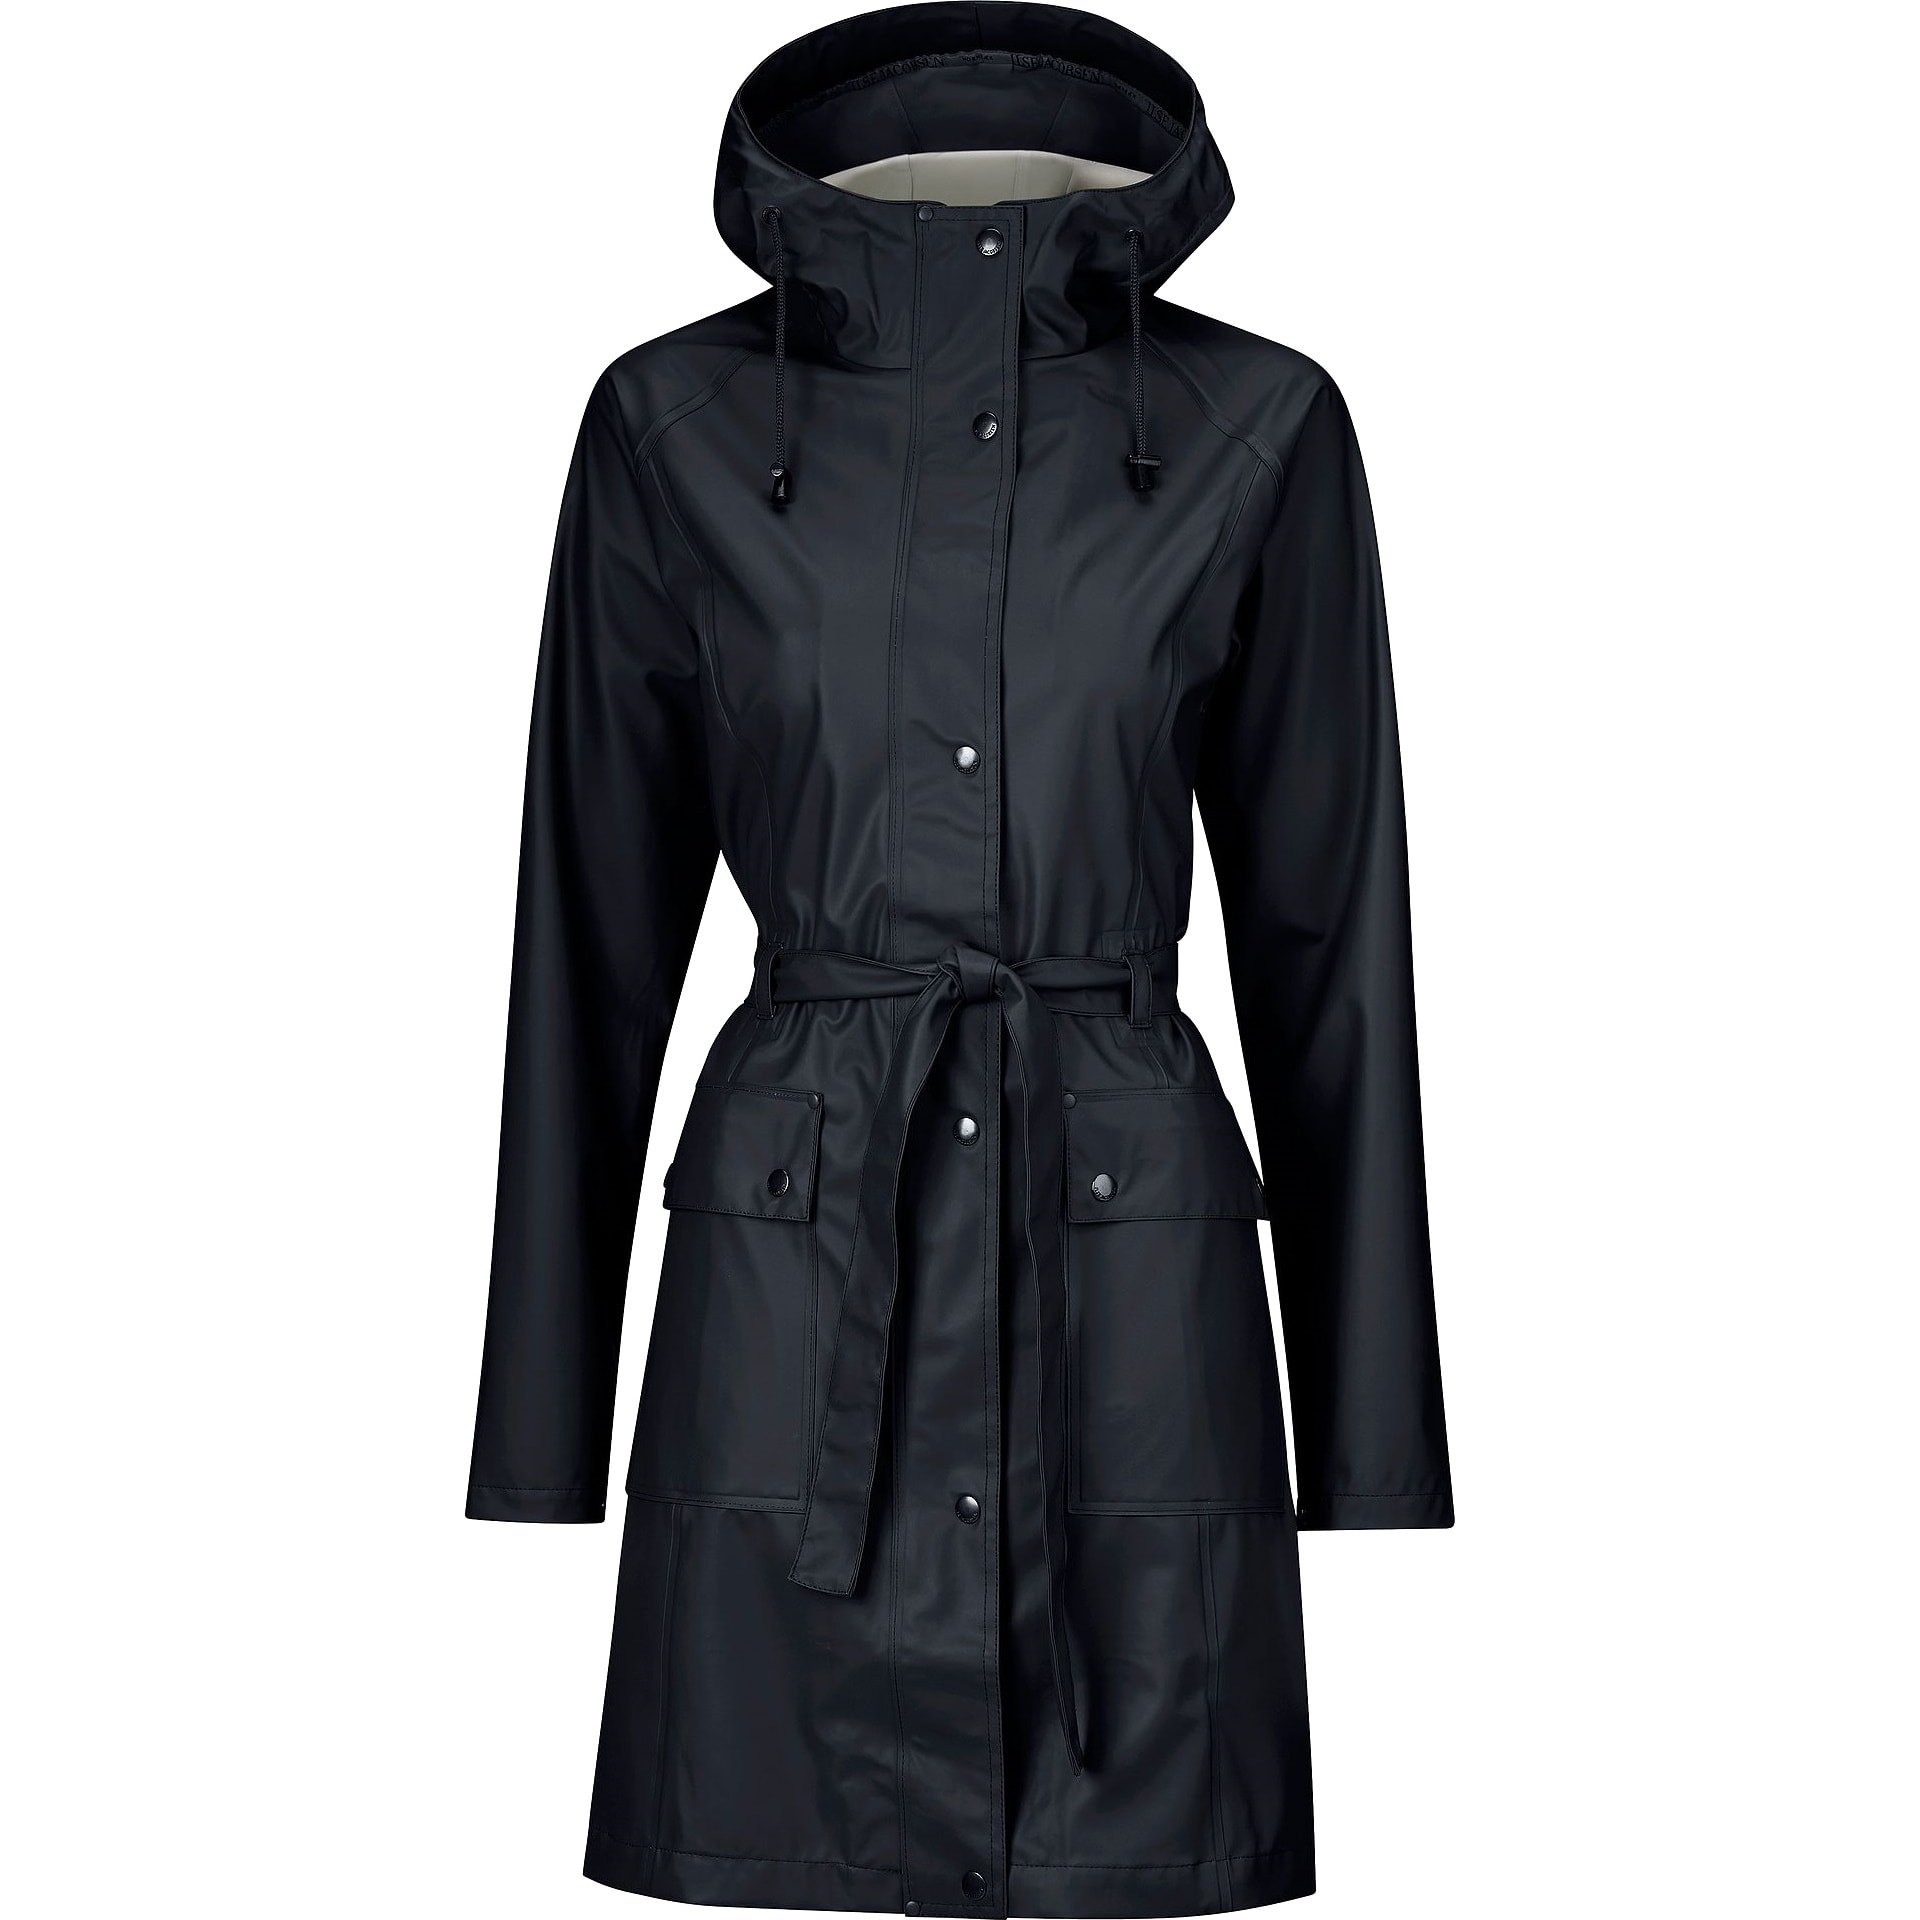 Ilse Jacobsen Women’s Belted Raincoat Black